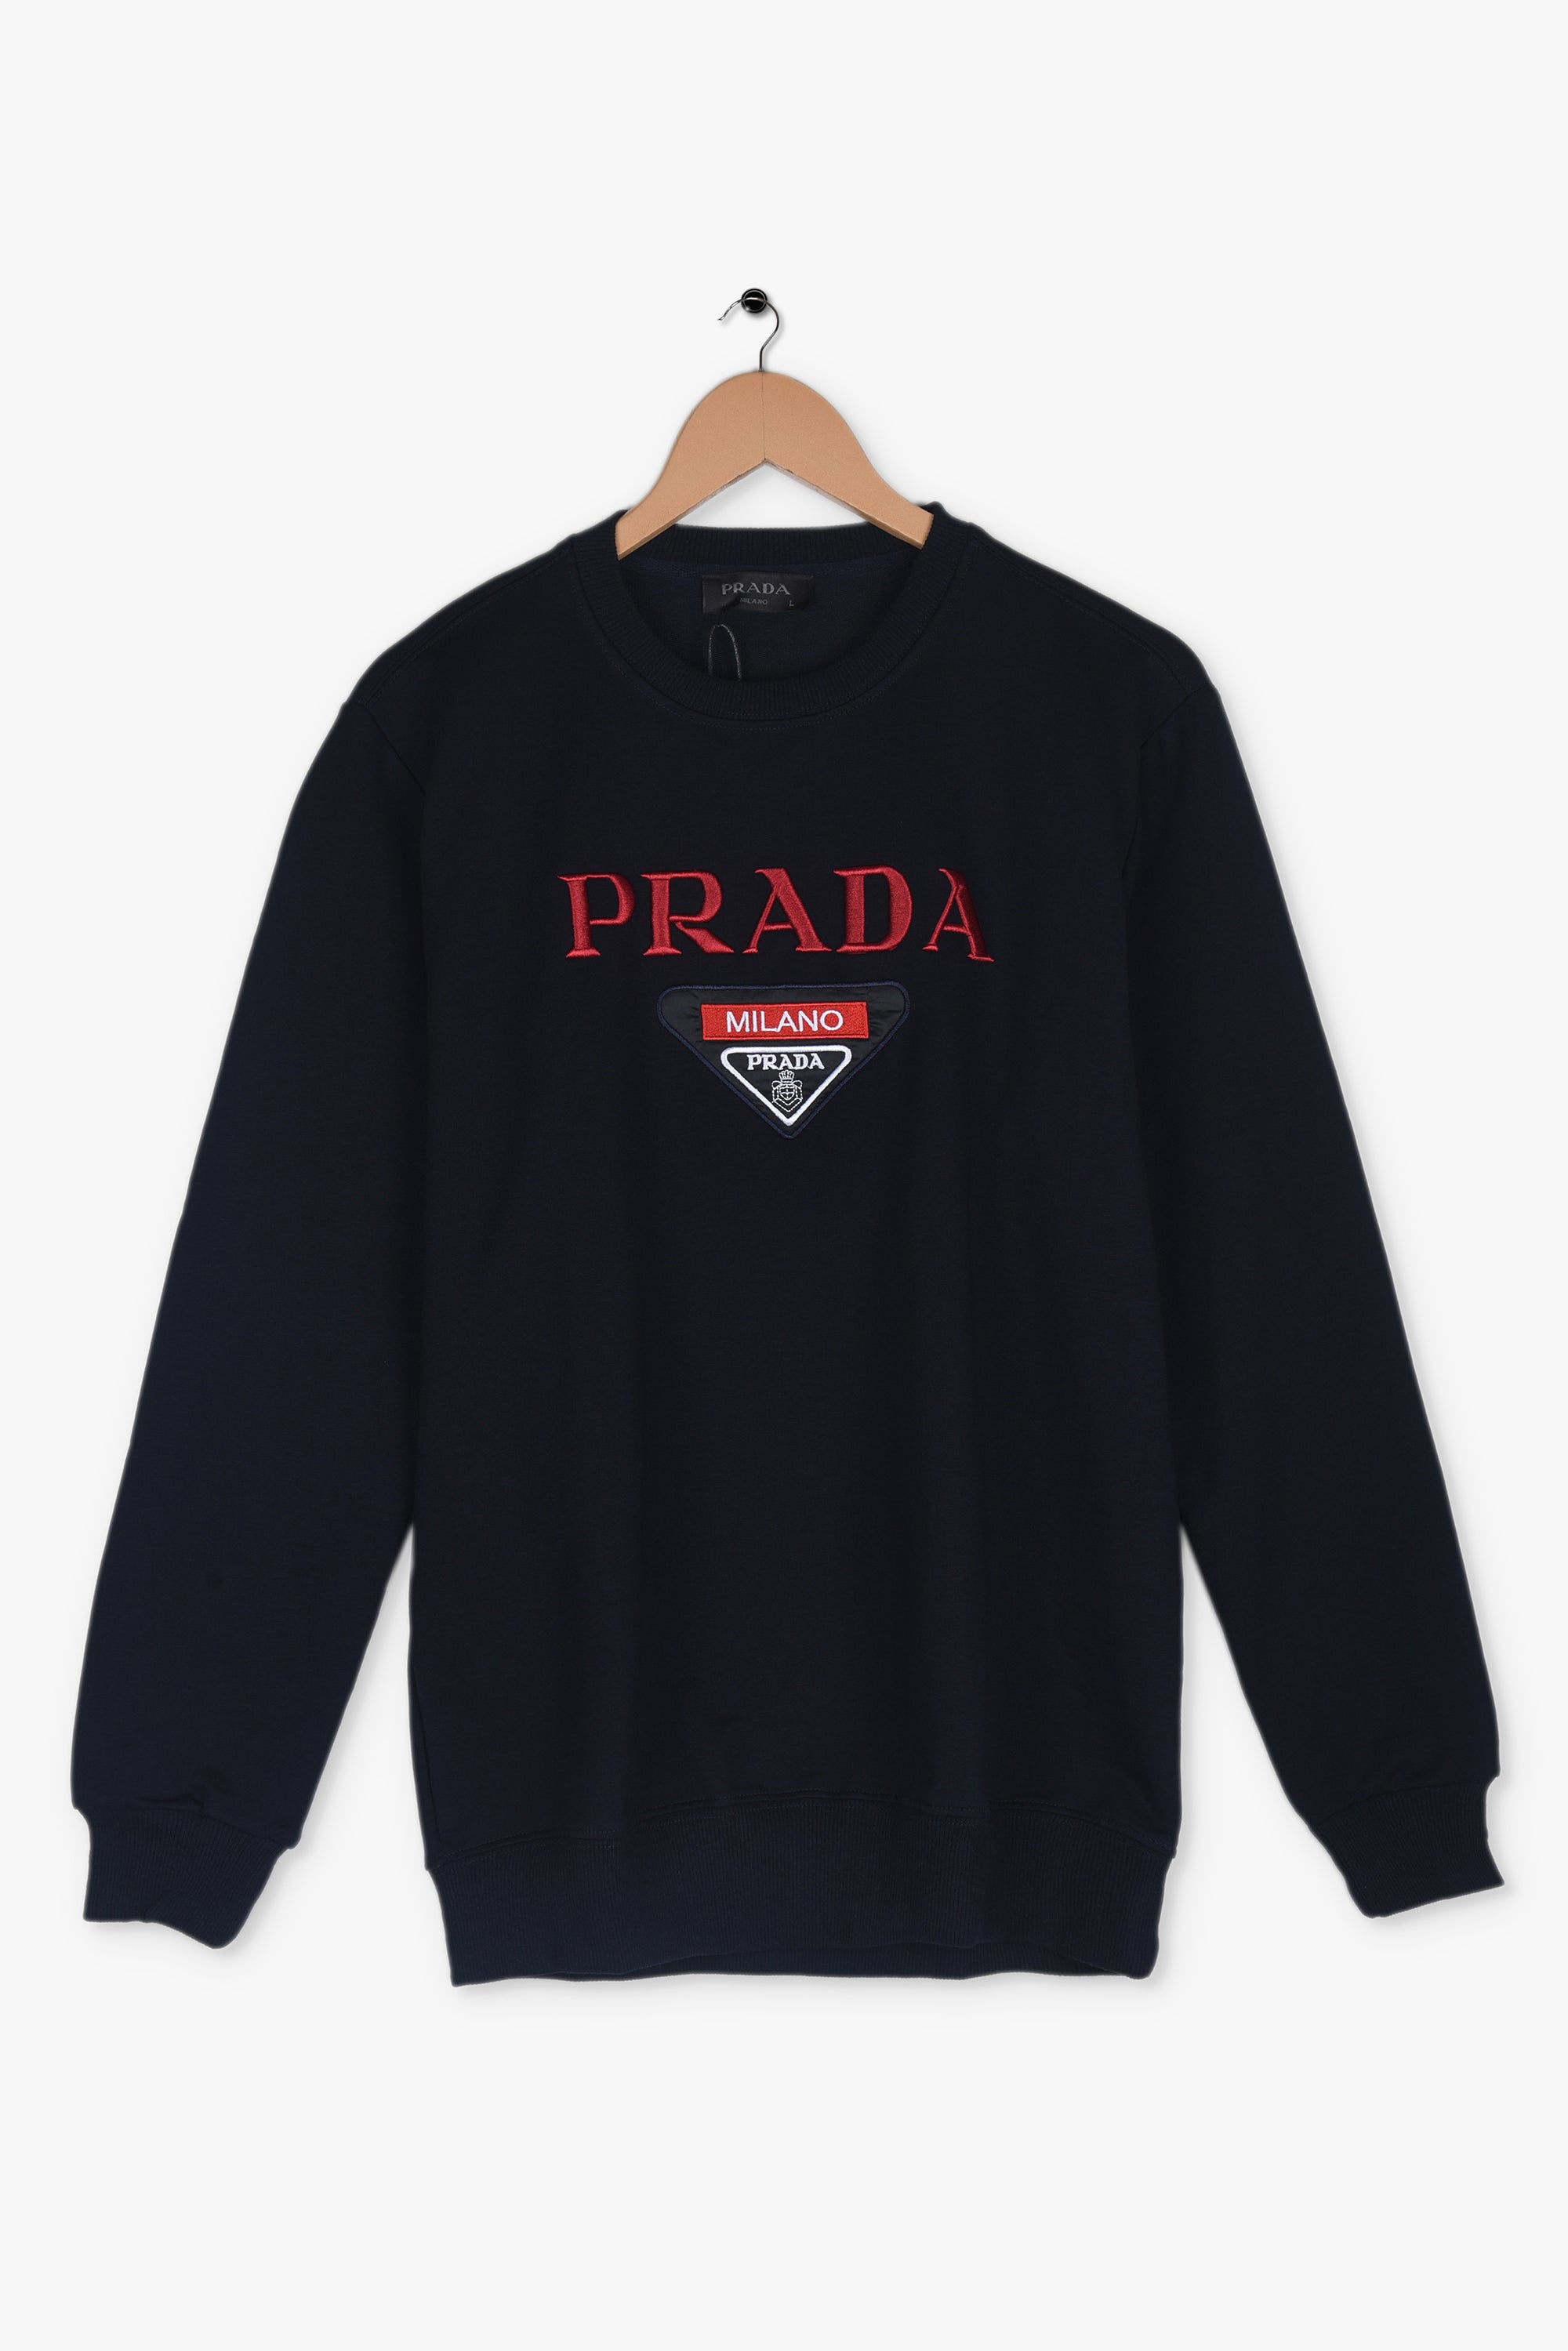 PRADA Embroidered Logo SWEATSHIRT